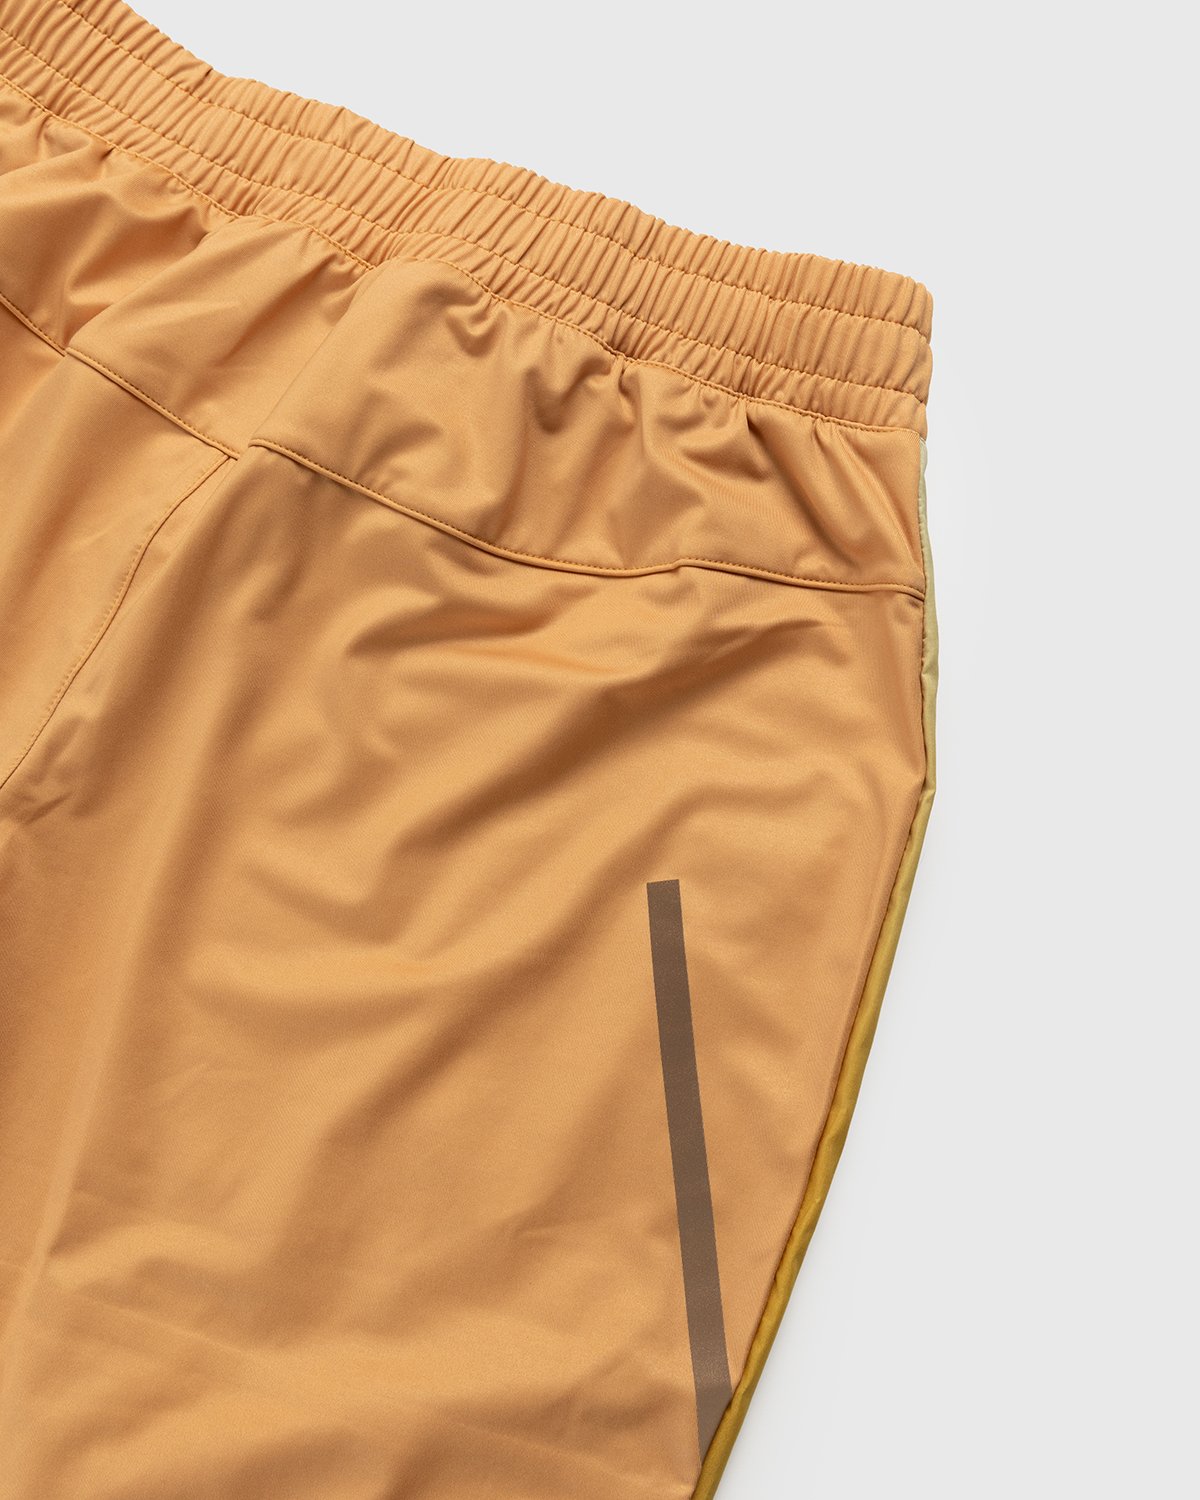 Loewe x On - Women's Technical Running Pants Gradient Orange - Clothing - Orange - Image 4